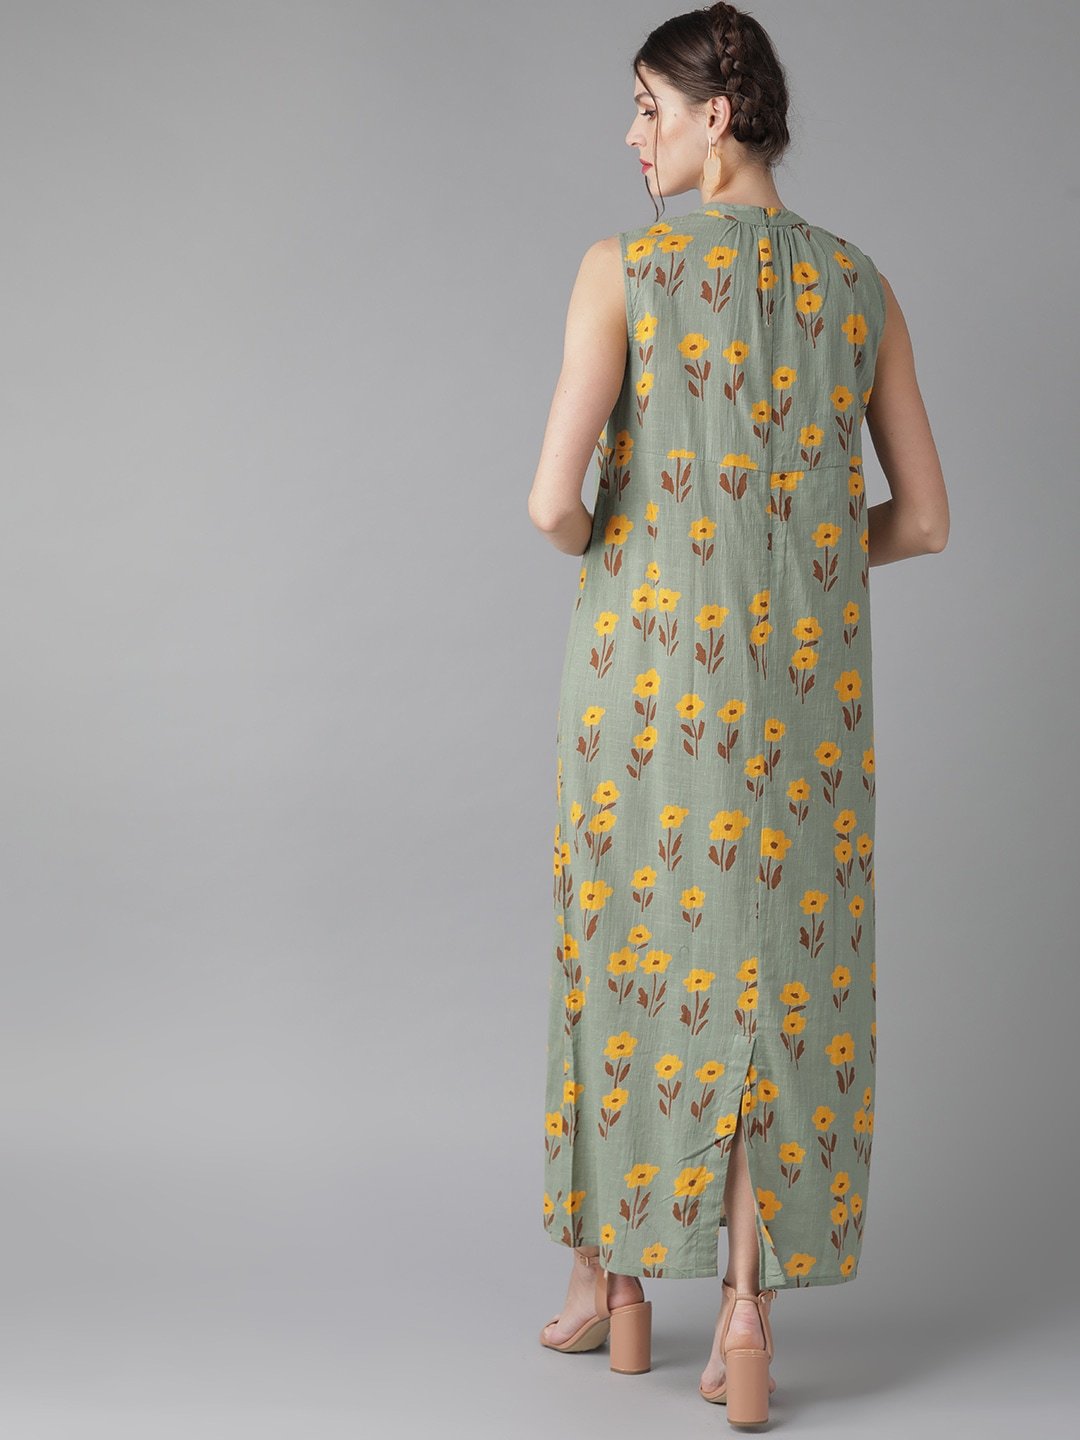 Women's  Green & Mustard Yellow Printed Maxi Dress - AKS